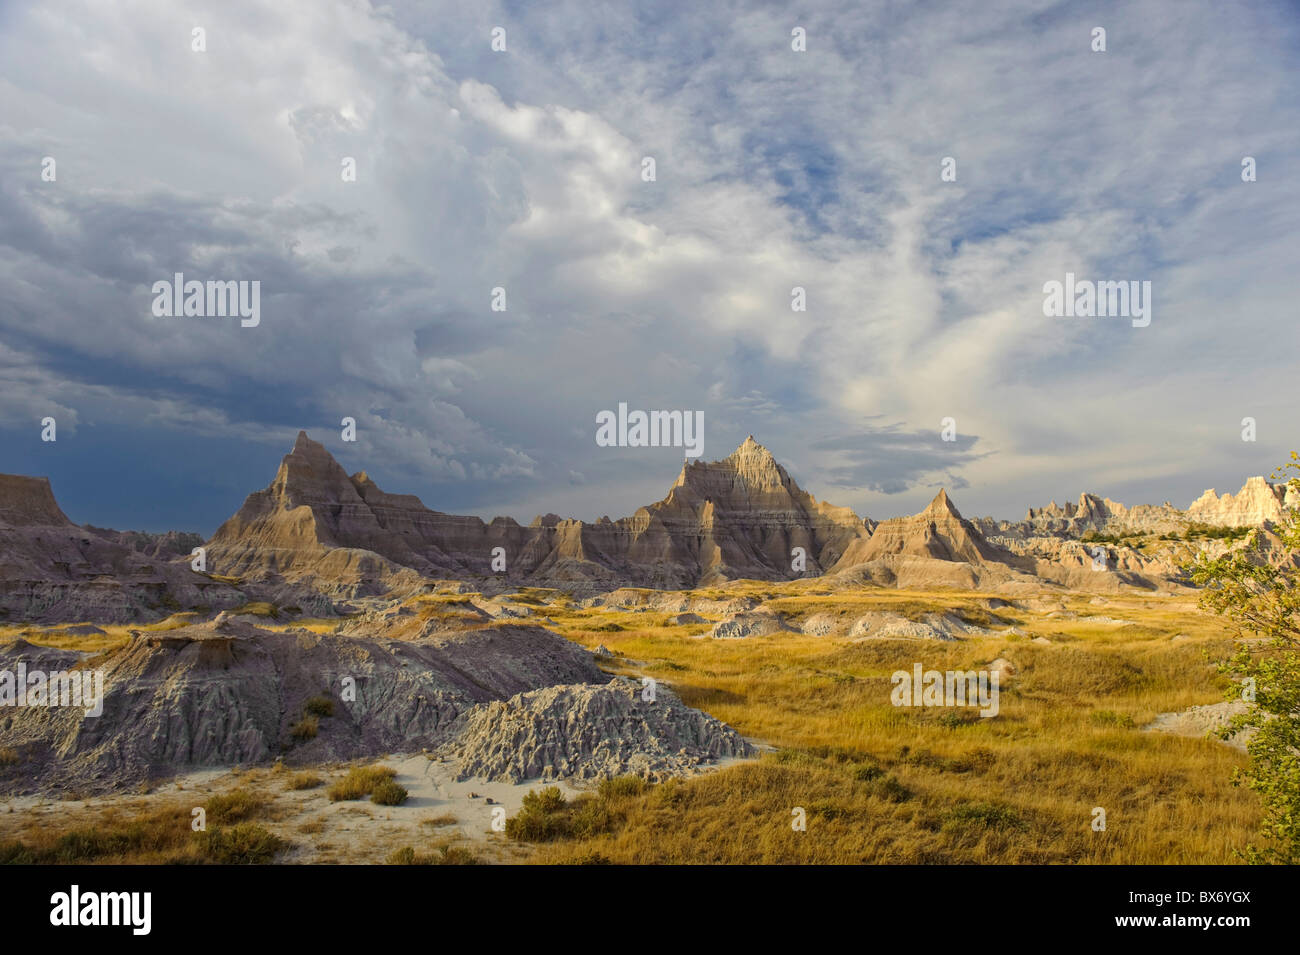 Parco nazionale Badlands, Dakota del Sud, STATI UNITI D'AMERICA Foto Stock